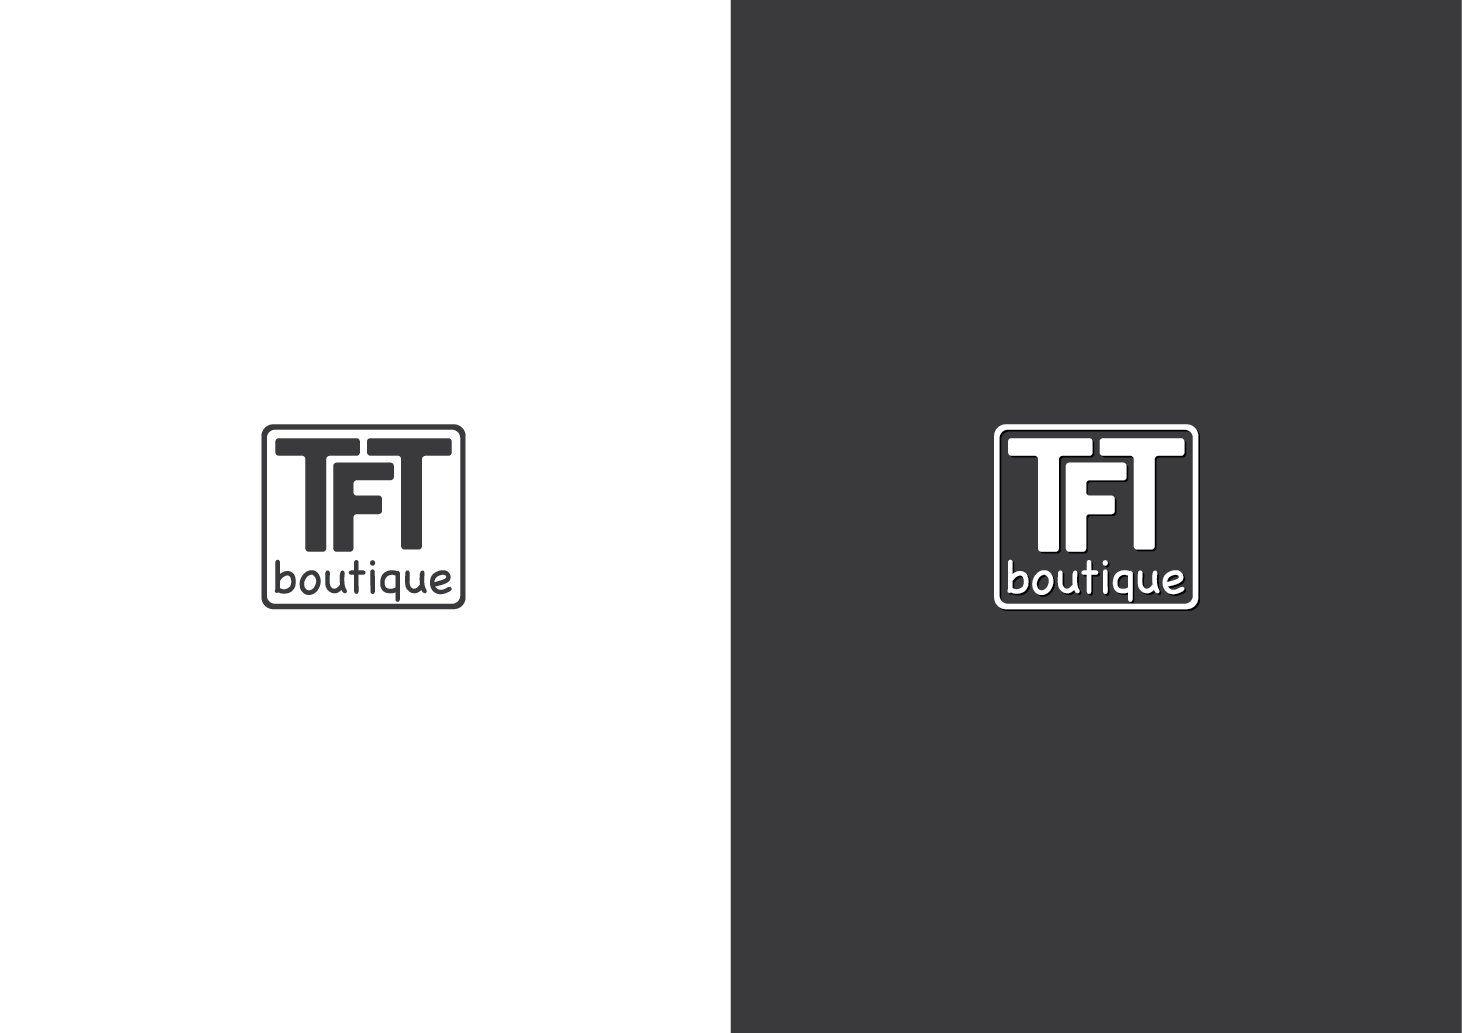 TFT Logo - Upmarket, Bold, Retail Logo Design for TFT Boutique by Crazy Art ...